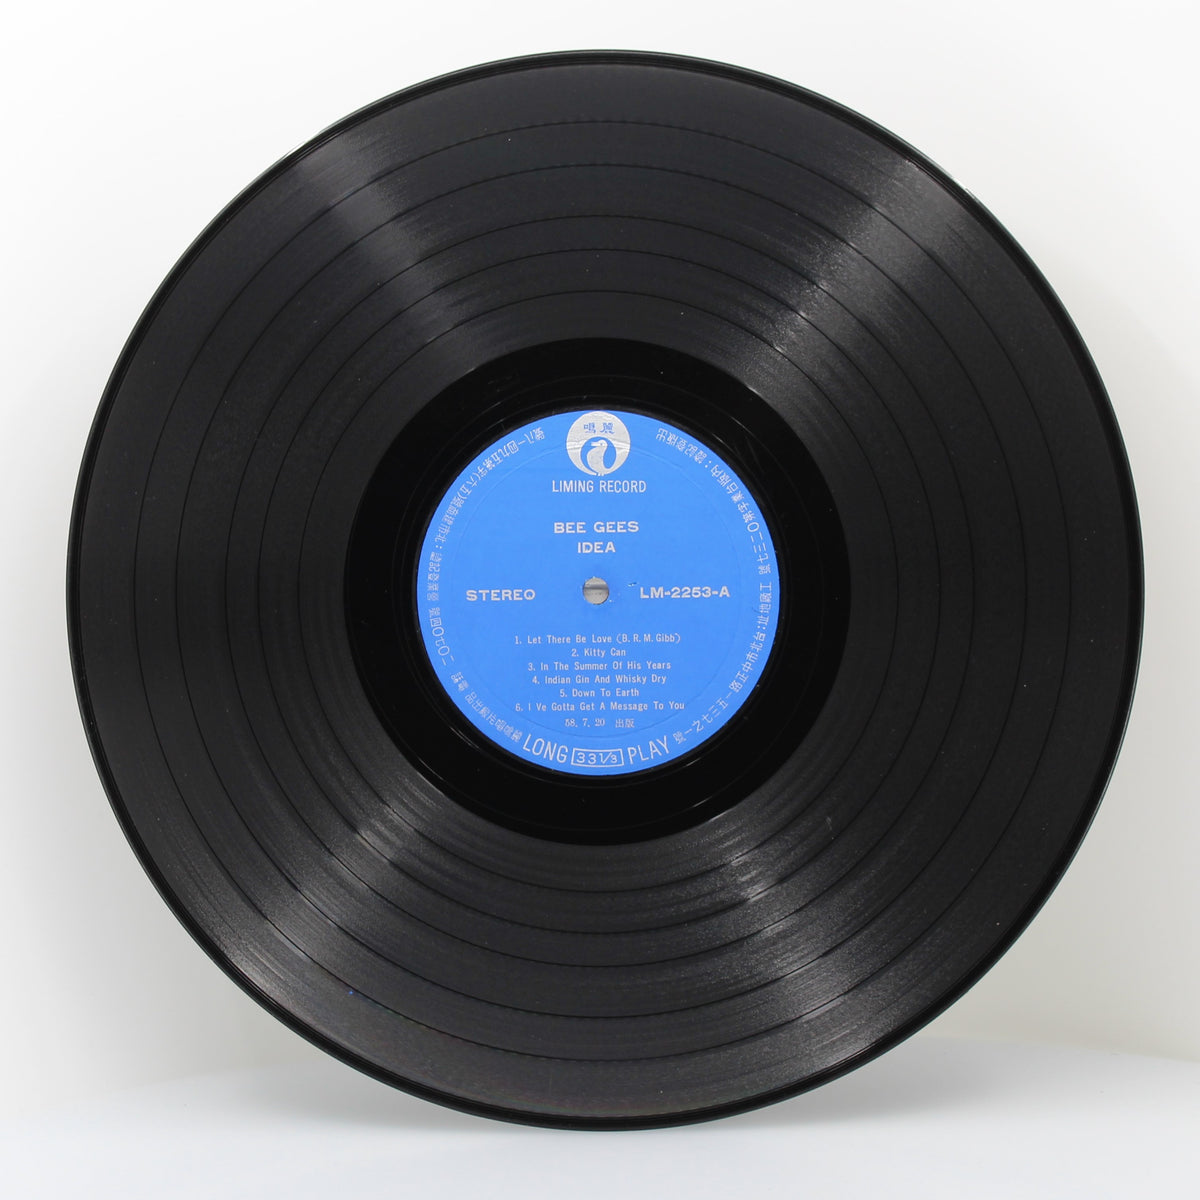 Bee Gees - Idea, Vinyl, LP 33Rpm, Album, Unofficial Release, Mono, Taiwan 1969